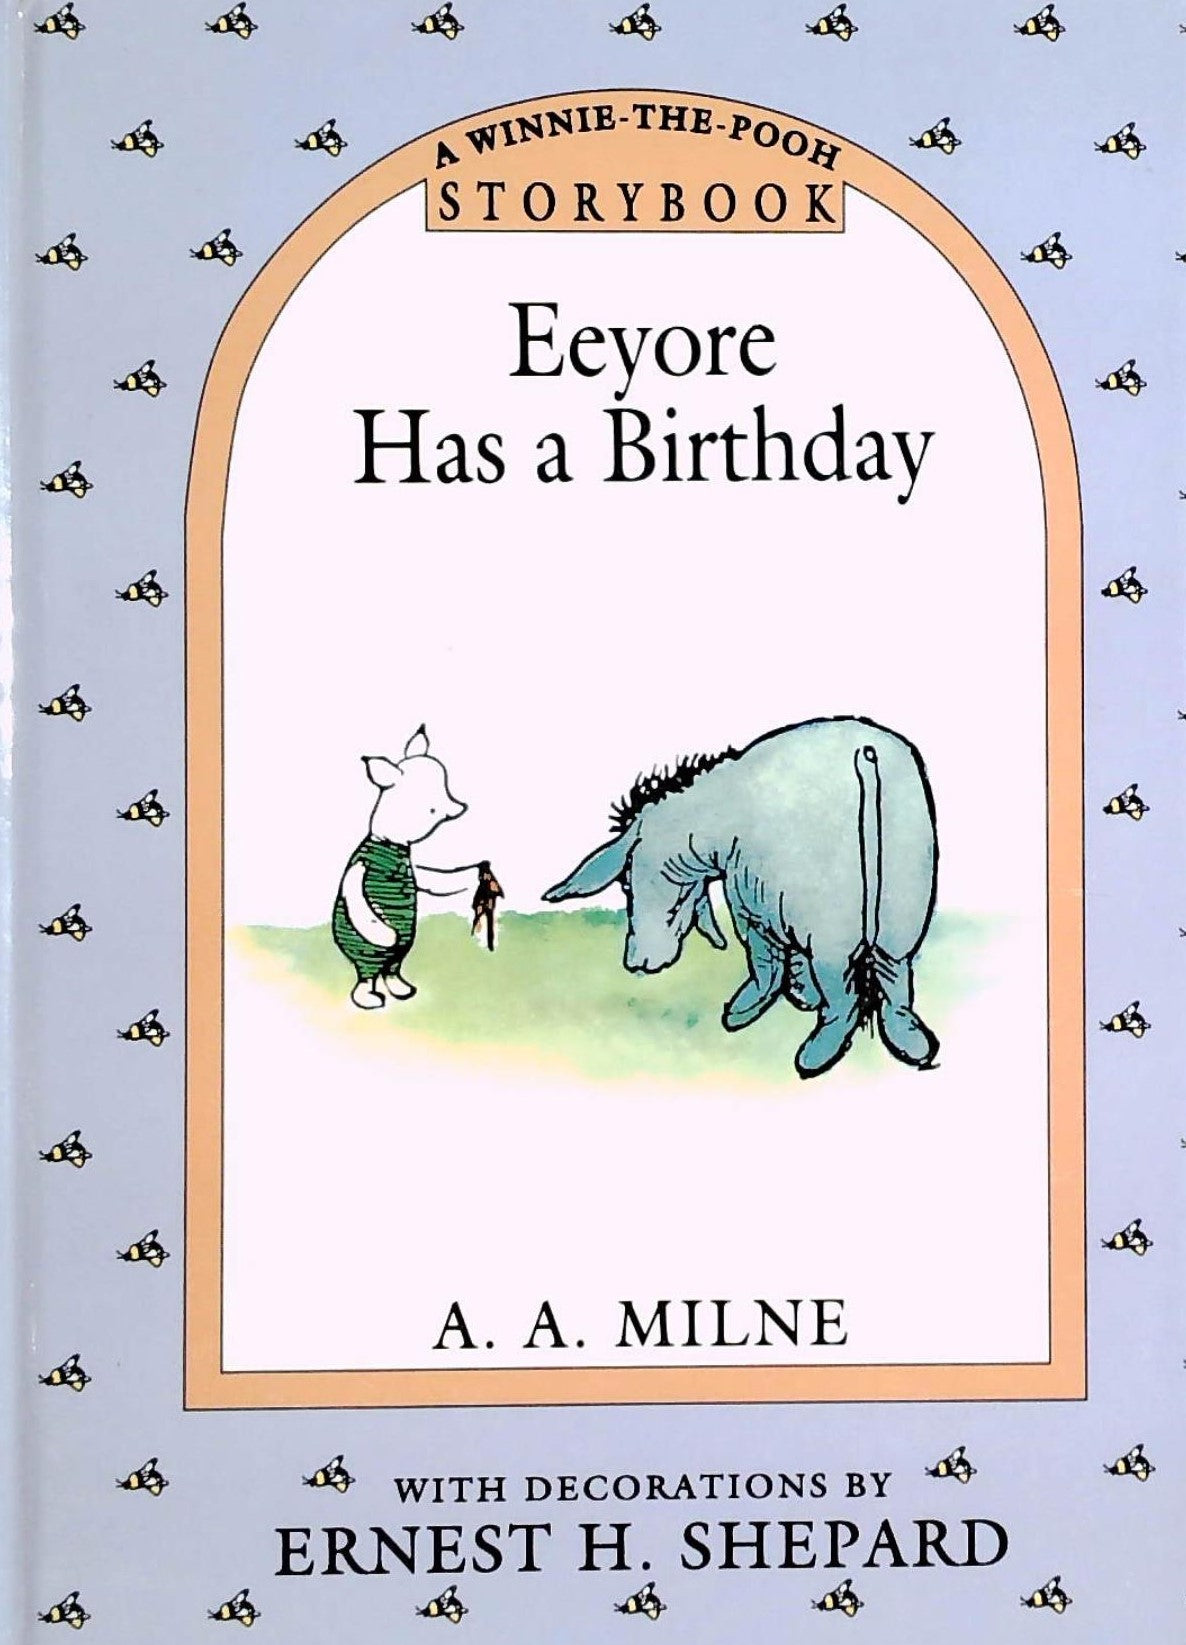 Livre ISBN 525470611 Winnie-The-Pooh Storybook : Eeyore Has a Birthday (A. A. Milne)